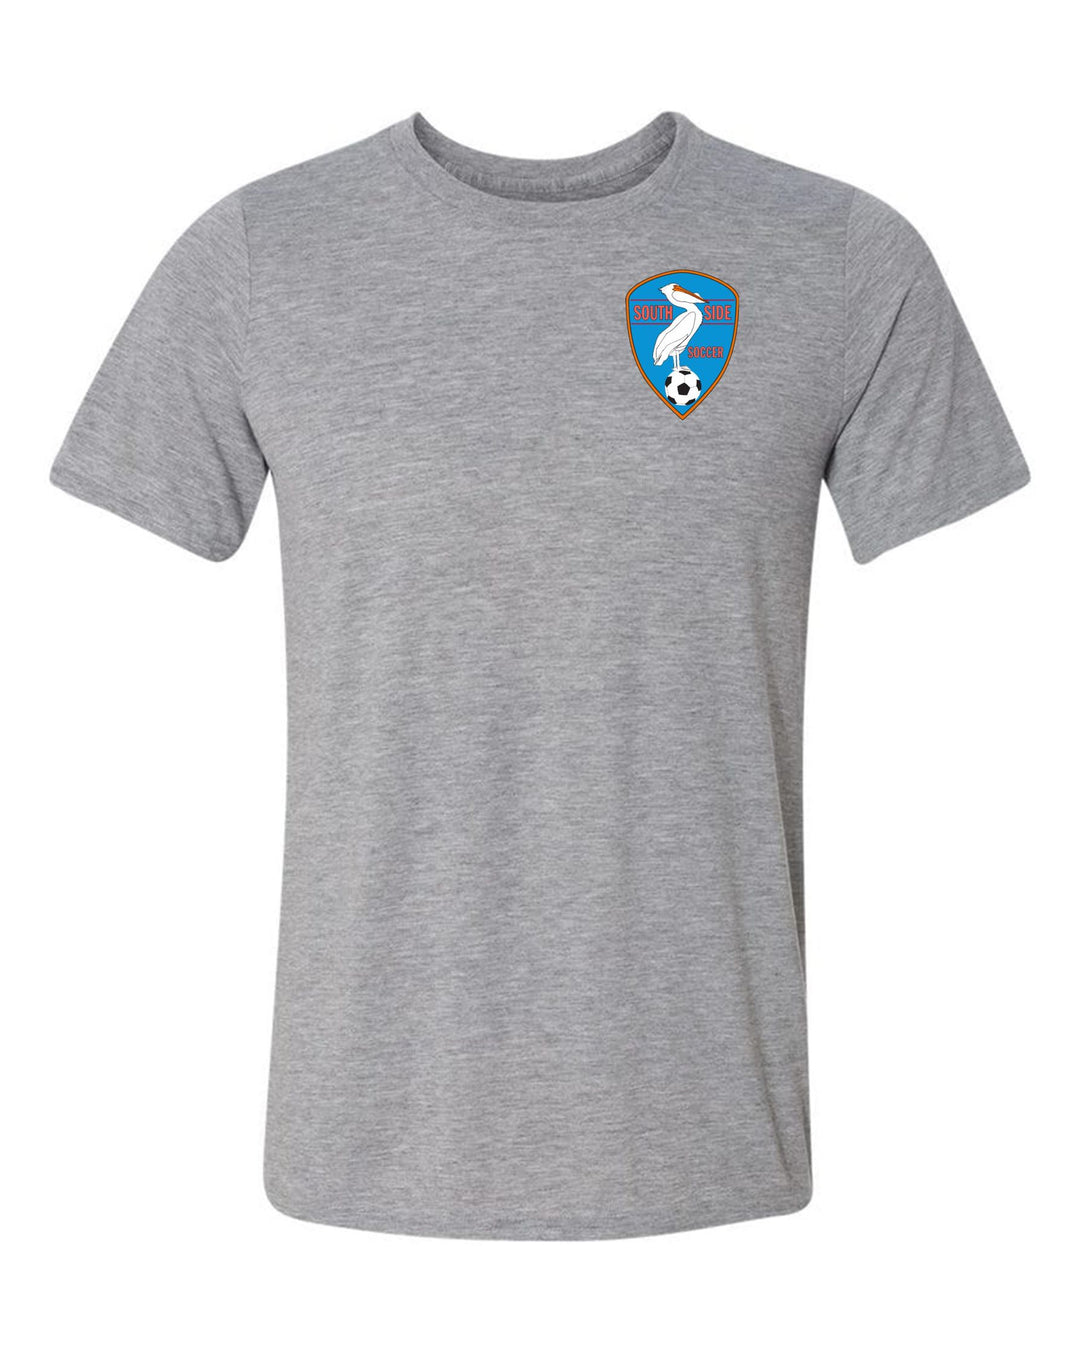 Southside Youth Soccer Short Sleeve T-Shirt SYS Spiritwear SPORT GREY MENS 2XL - Third Coast Soccer